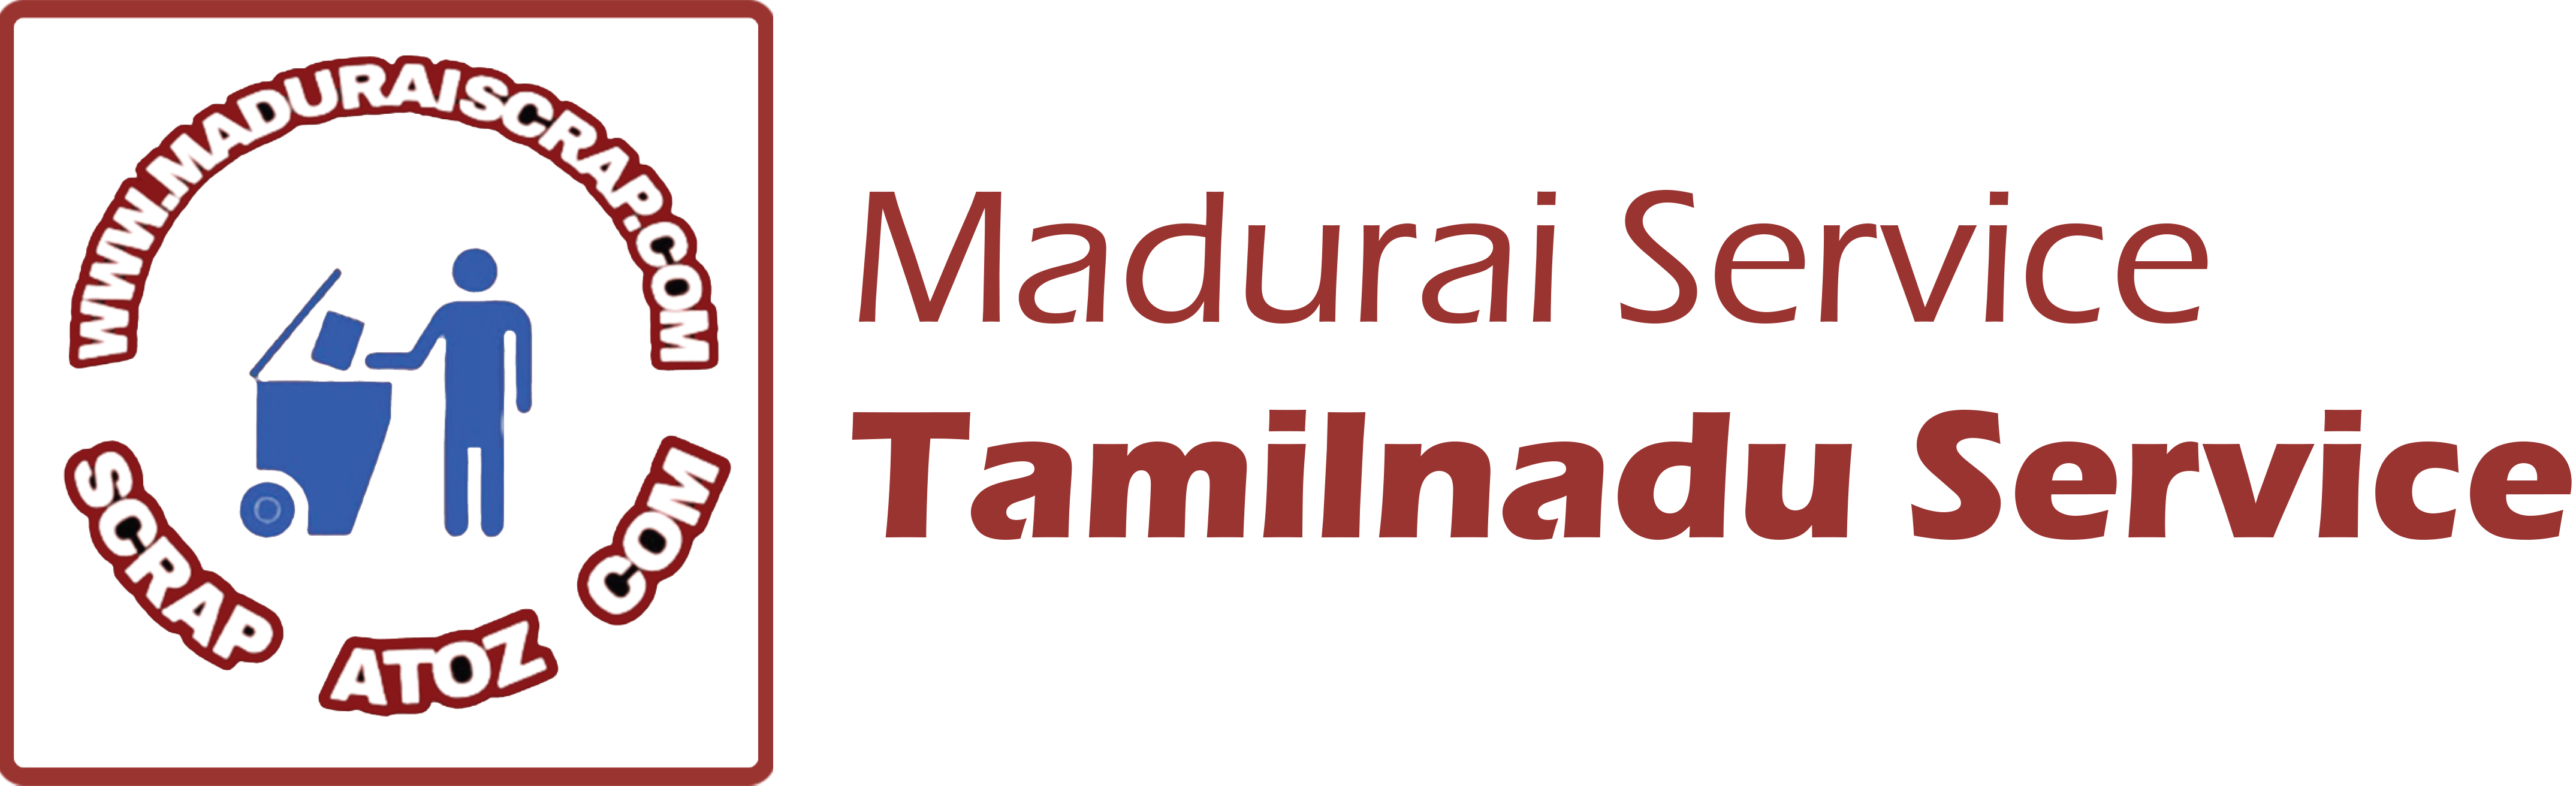 Madurai Scrab